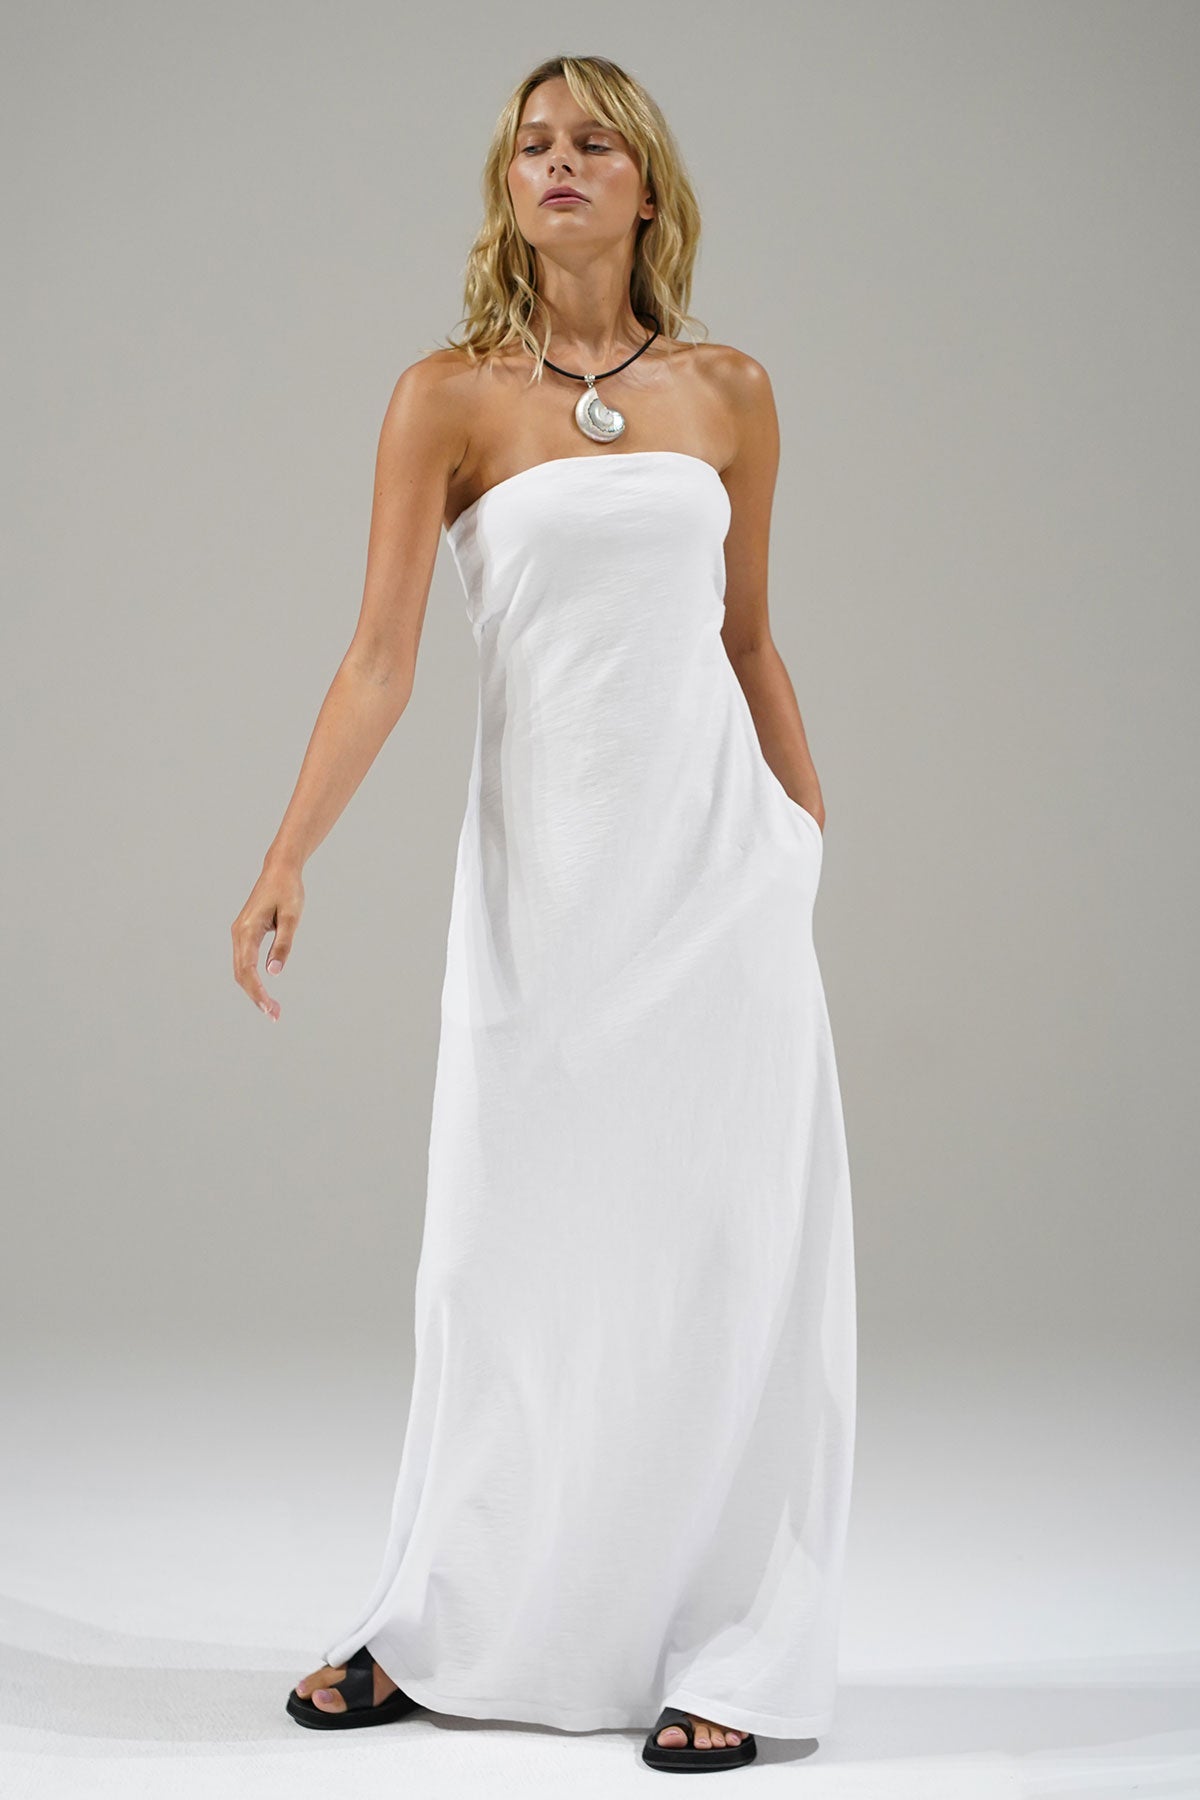 LNA Topanga strapless jurk in wit